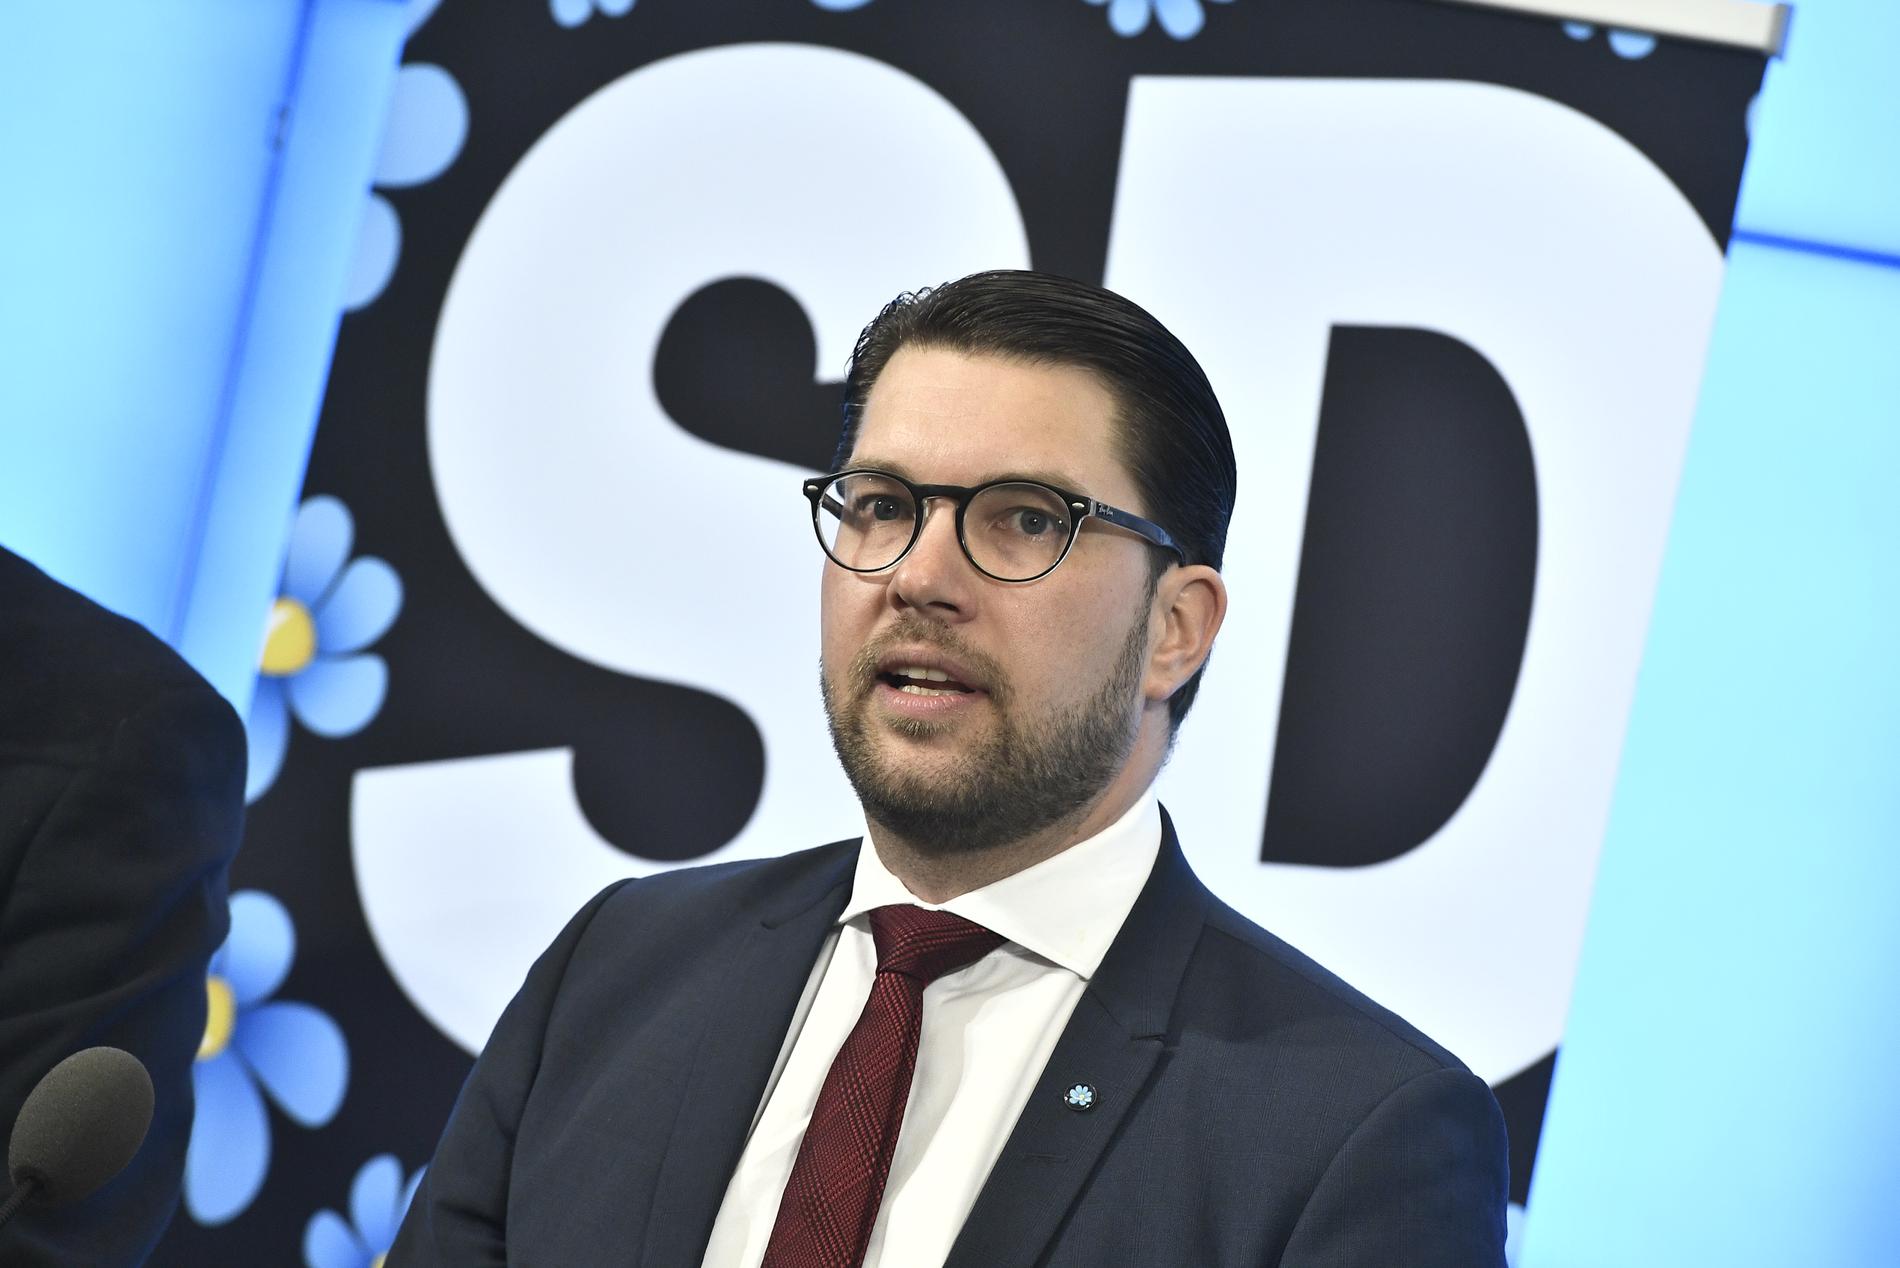 SD-ledaren Jimmie Åkesson